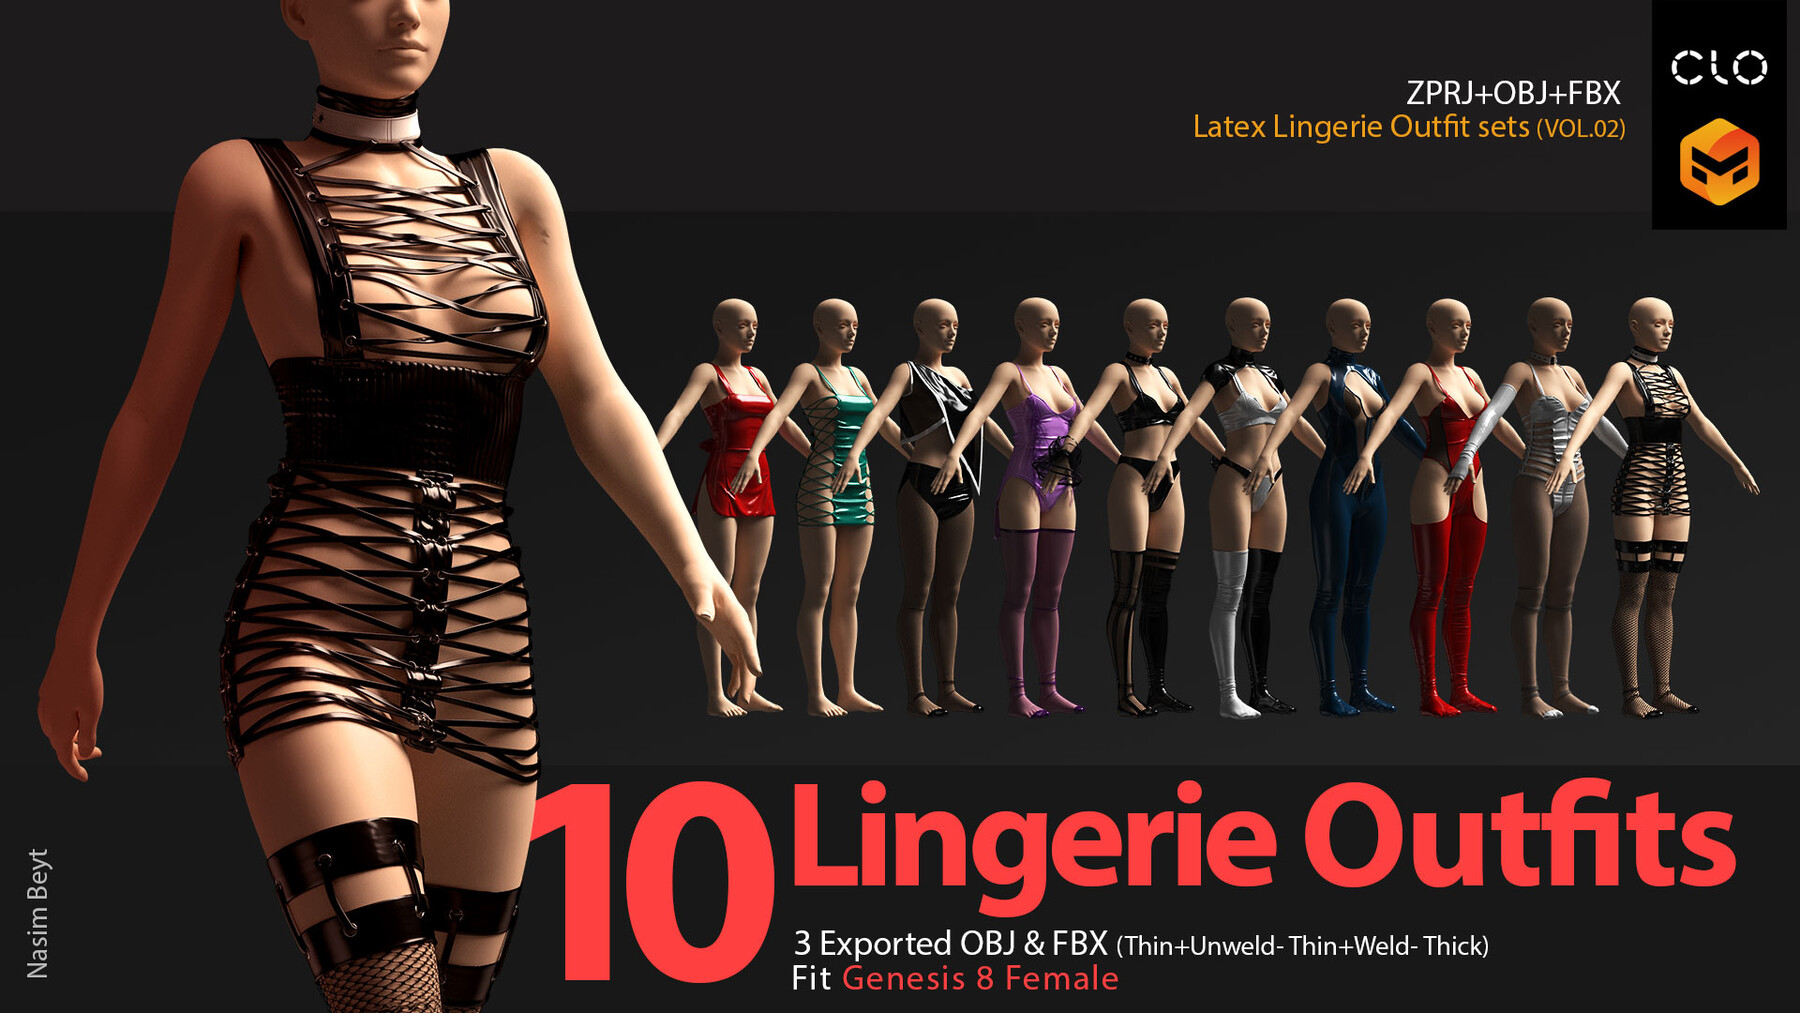 Lingerie Archives - Girls Clothes